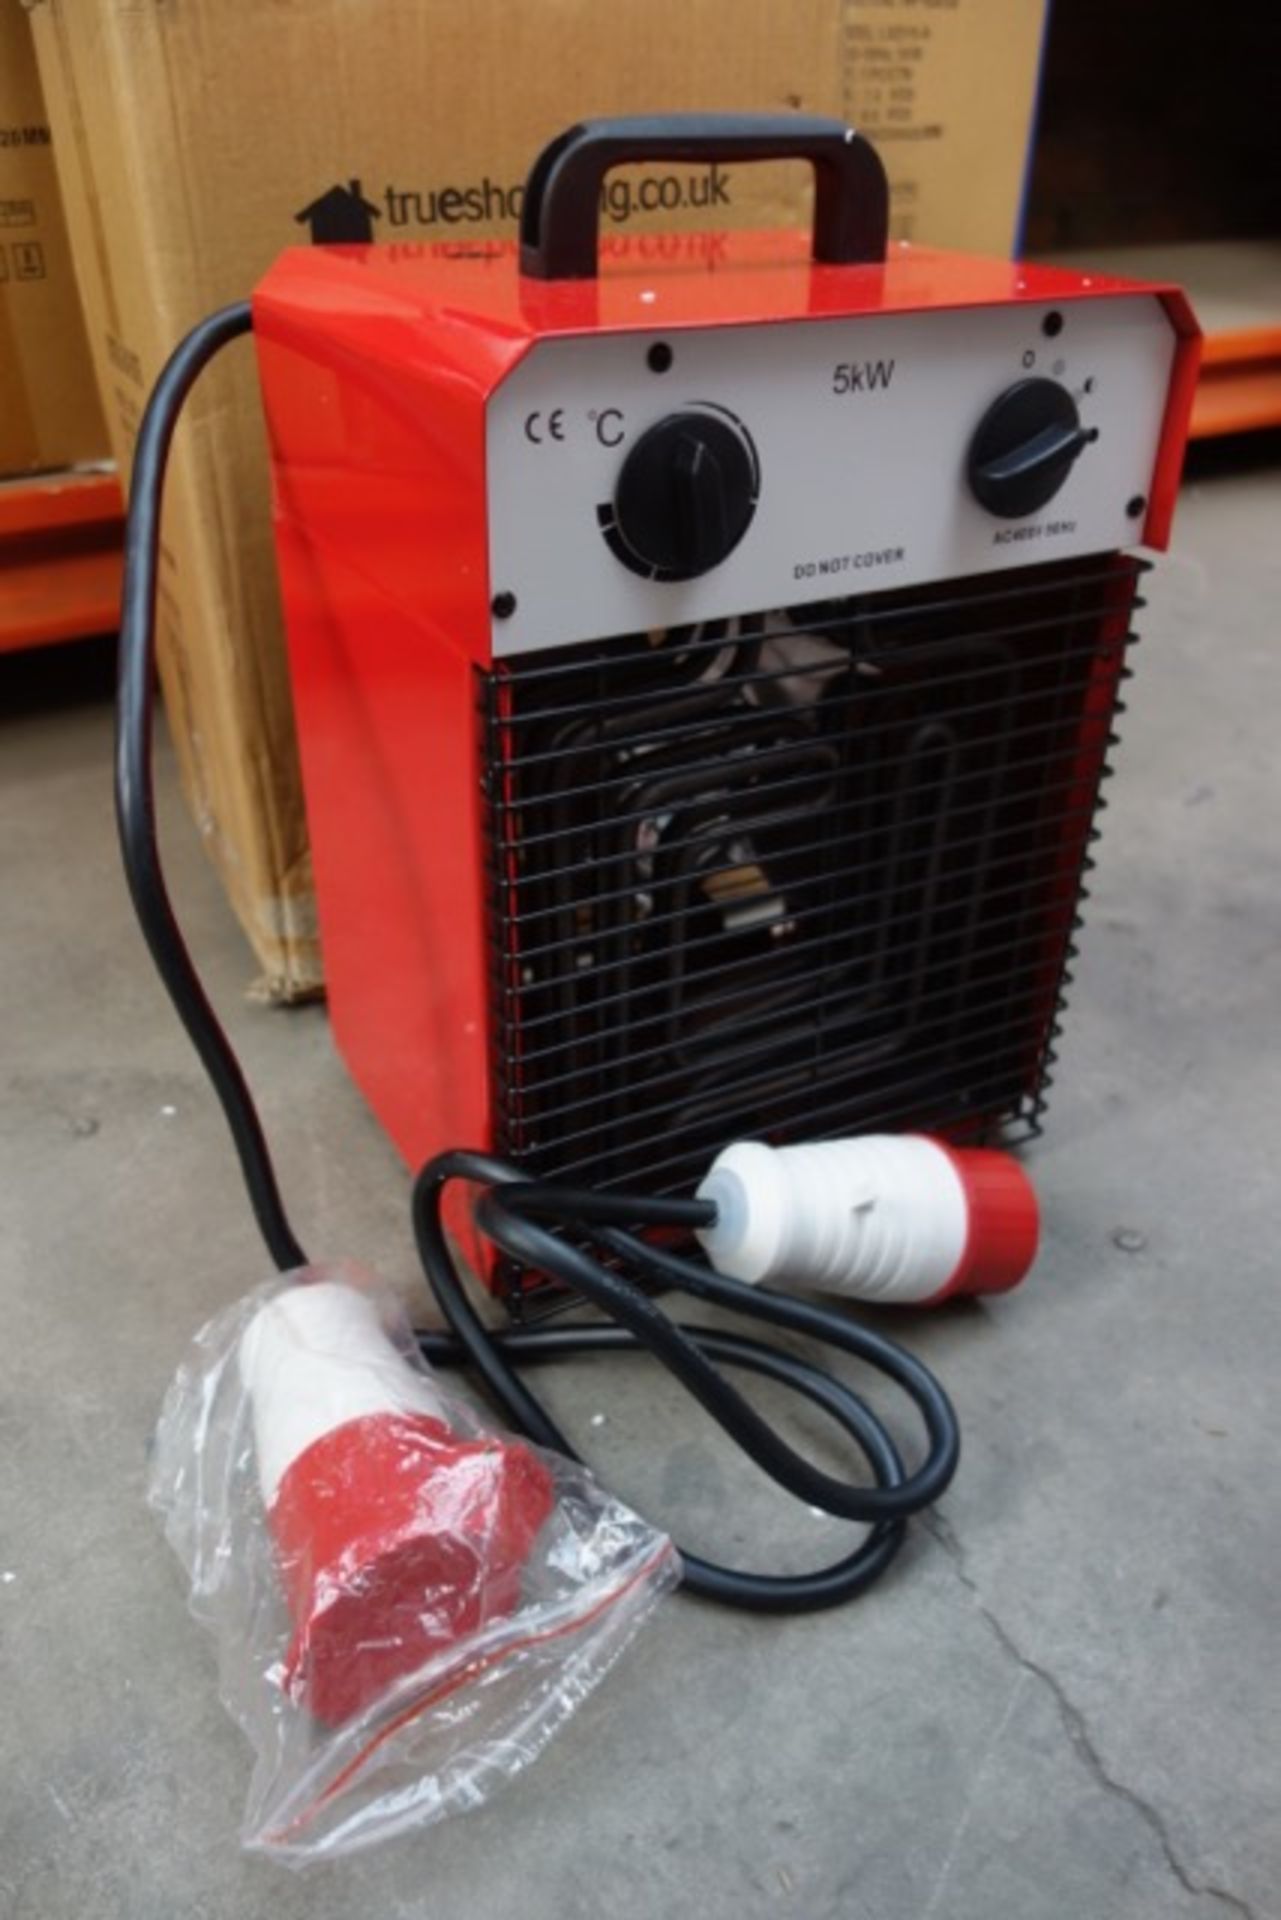 1 x 5KW Industrial Fan Heater. 400v-50Hz 5KW. Very high heat output. RRP £199.99.